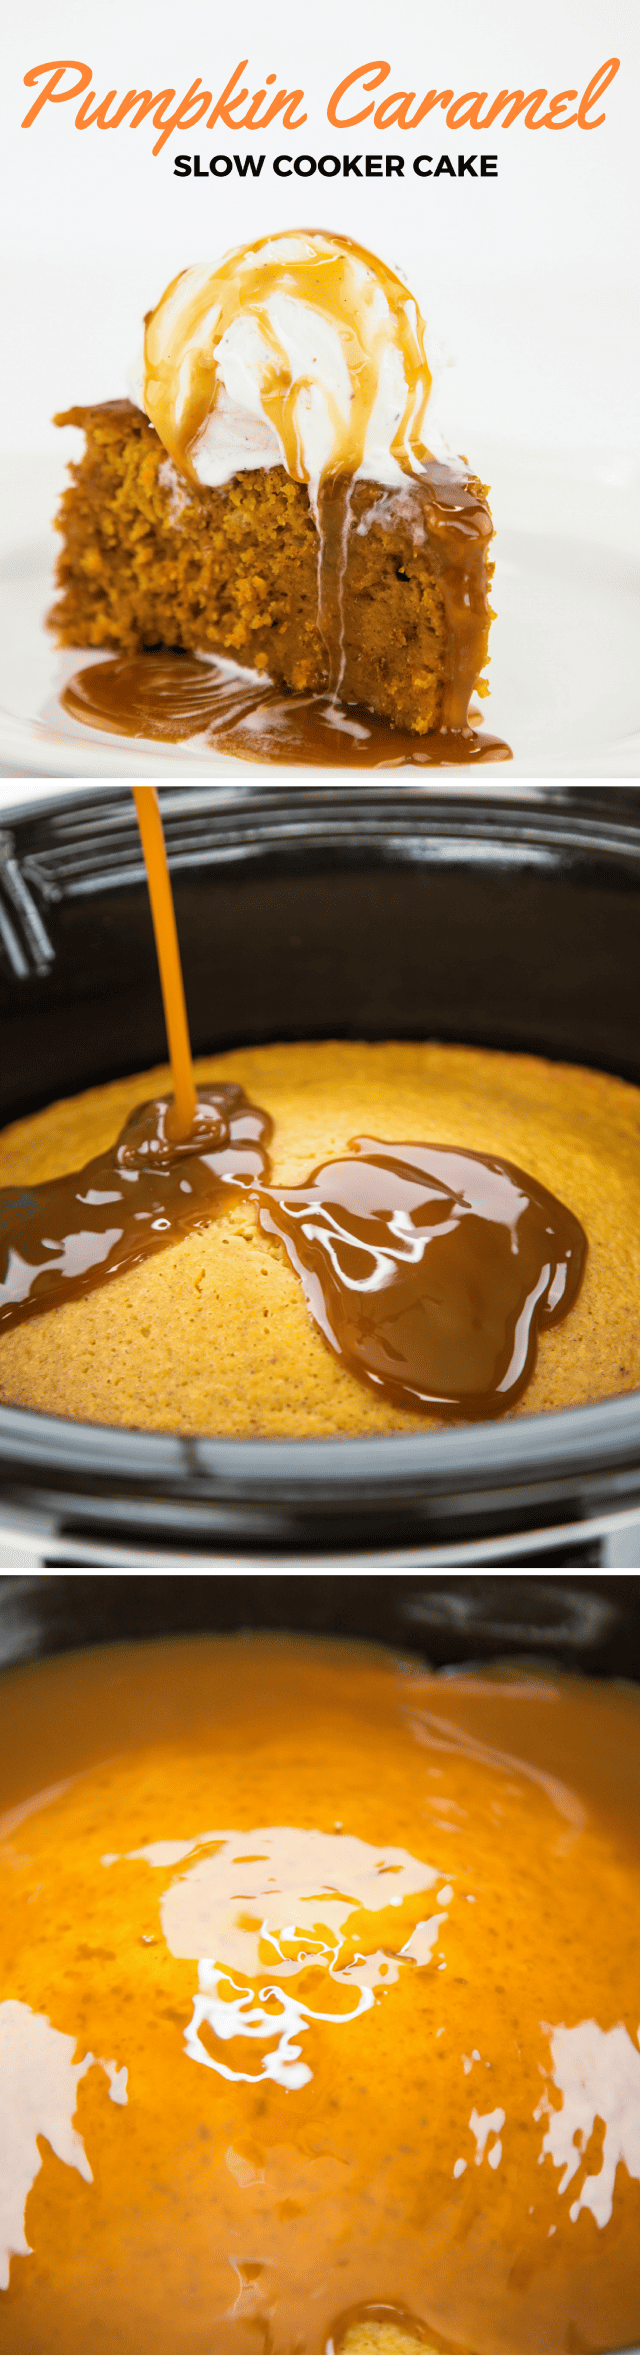 Crock Pot Slow Cooker Pumpkin Caramel Cake Recipe